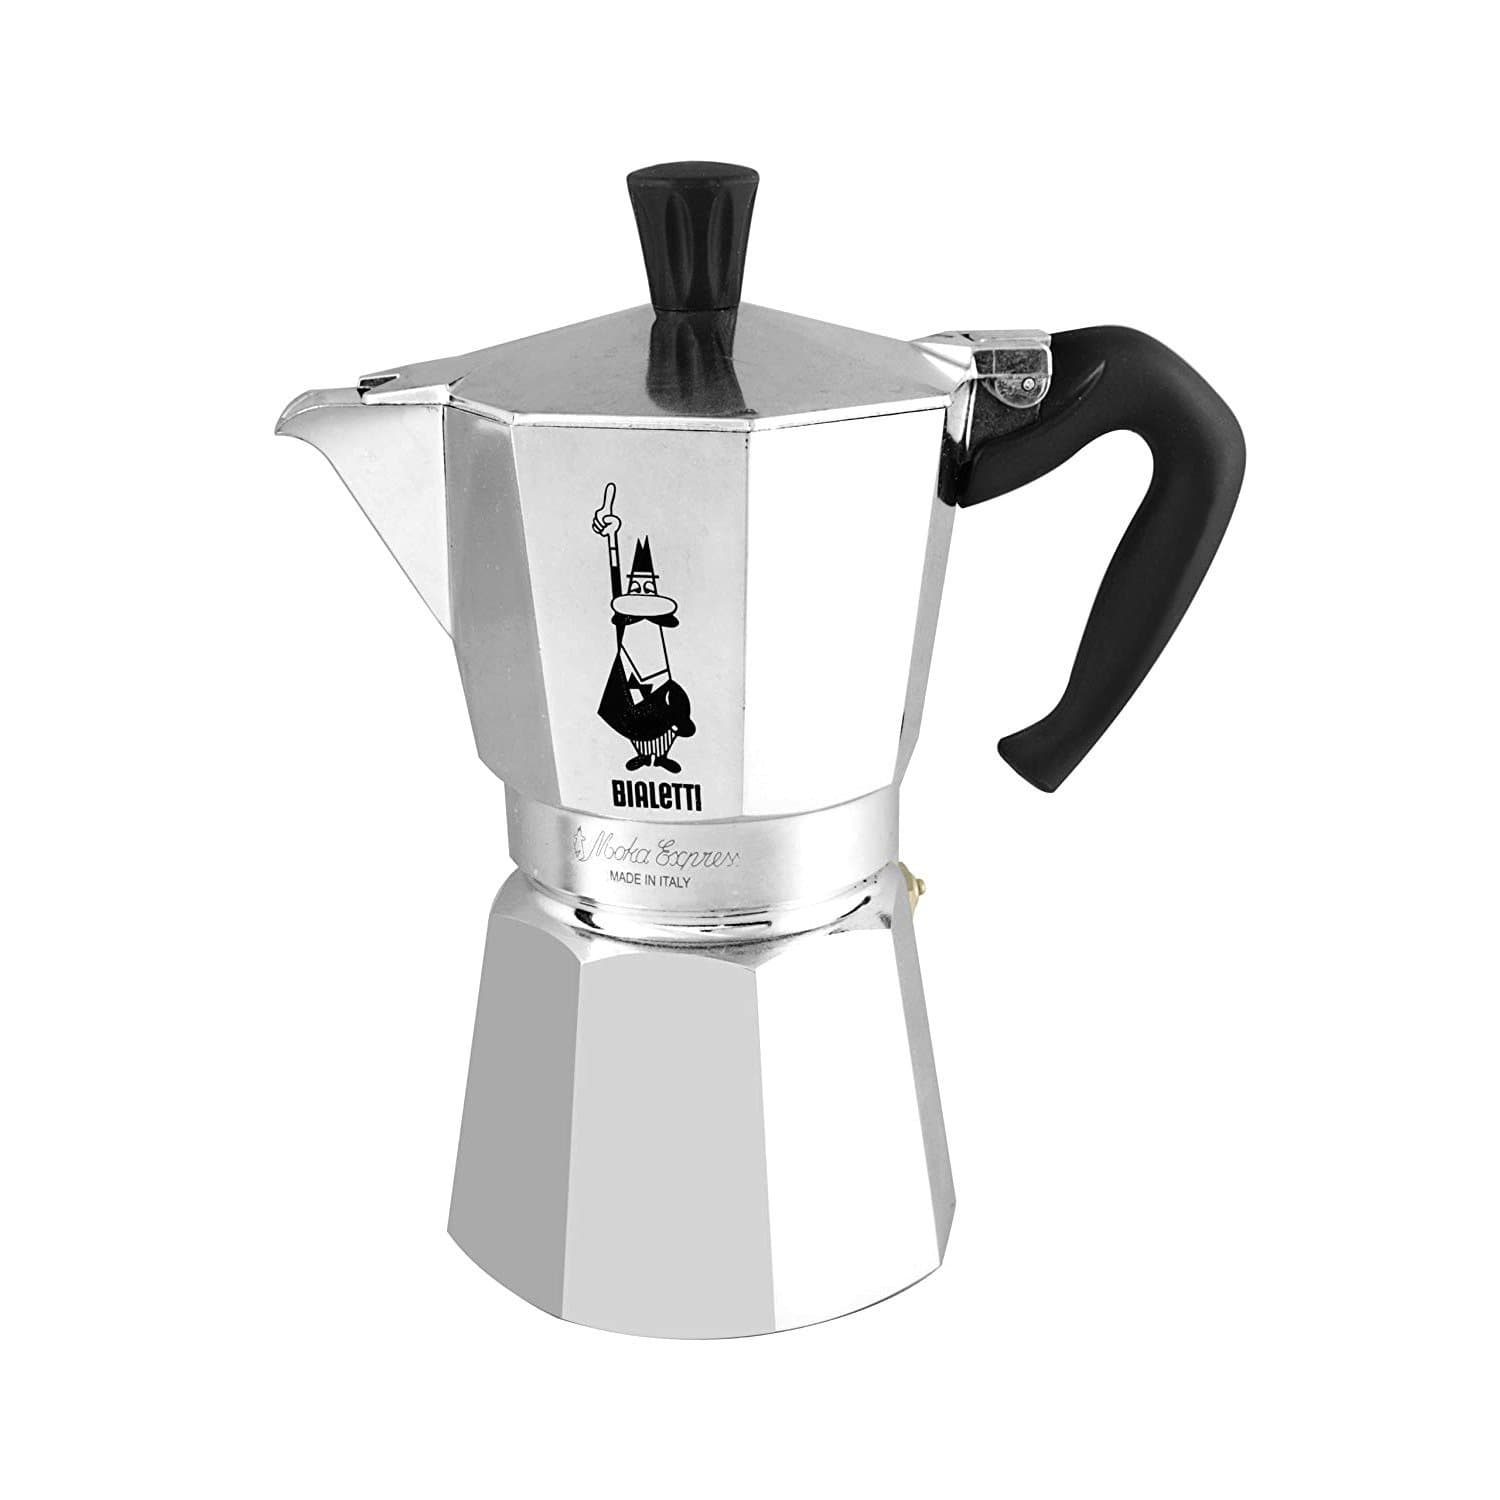 Bialetti Moka Express Coffee Maker - Silver, 3 Cups - 1162 - Jashanmal Home